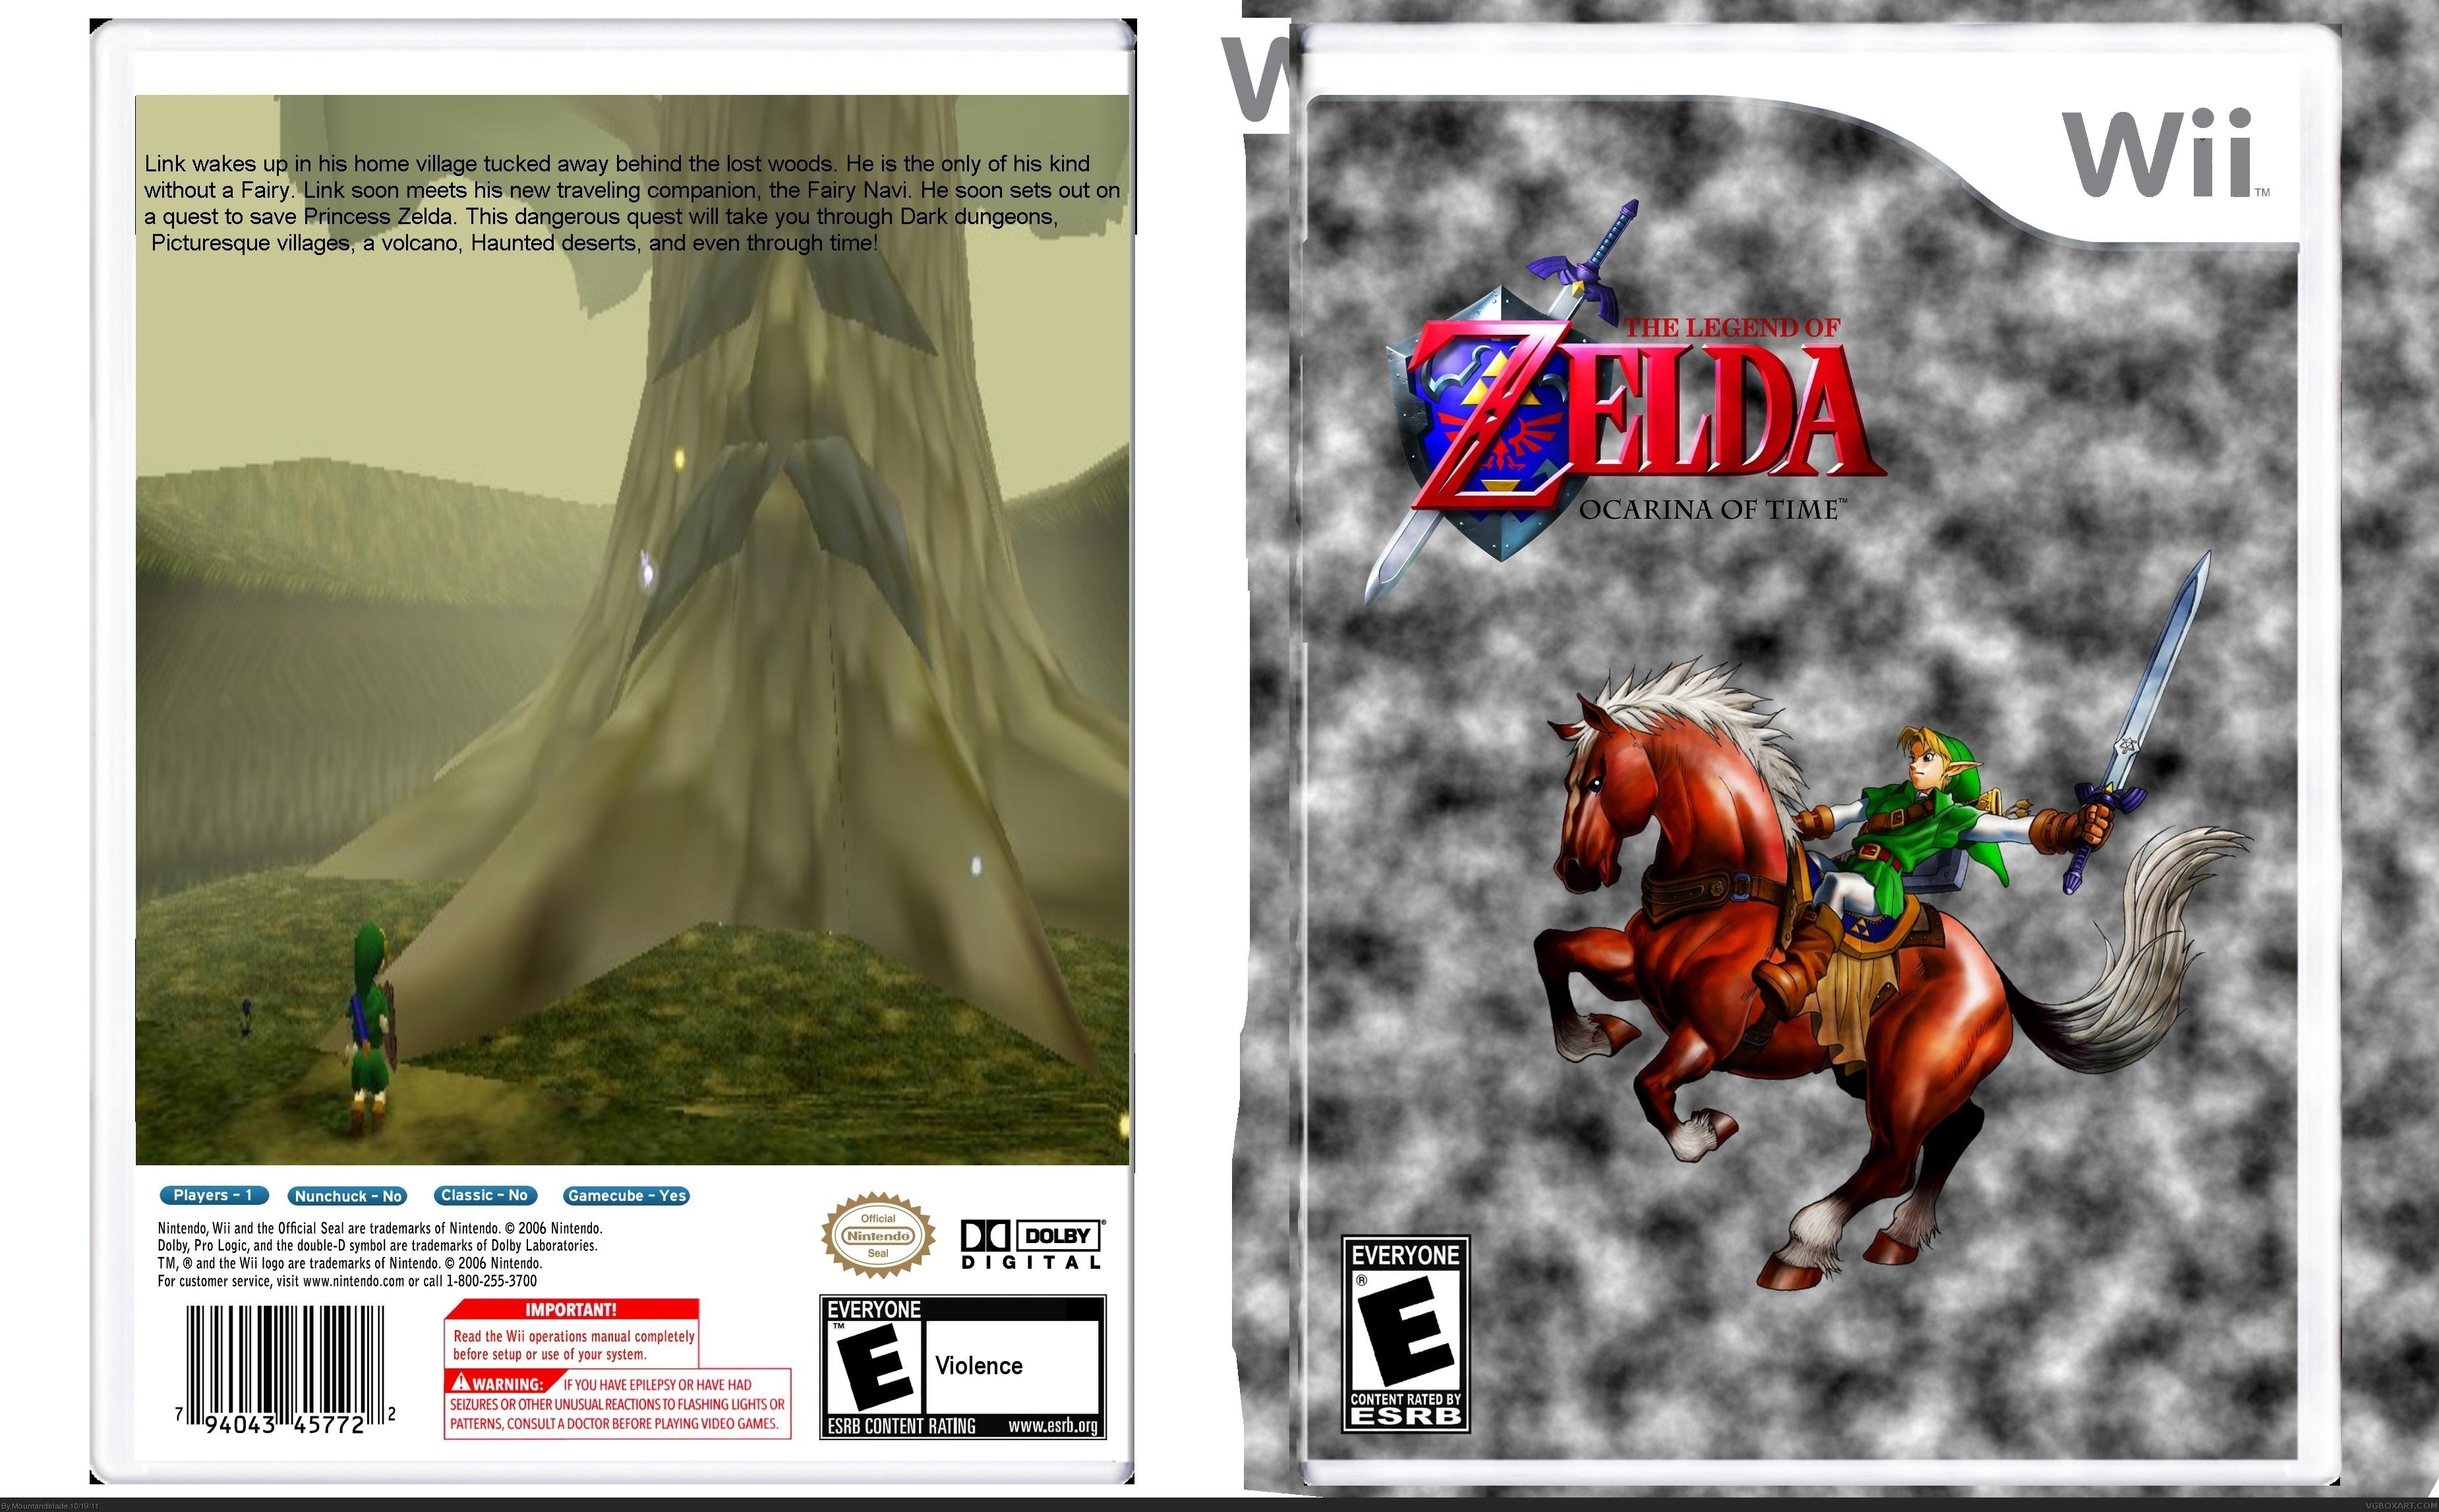 The Legend of Zelda: Ocarina of Time box cover